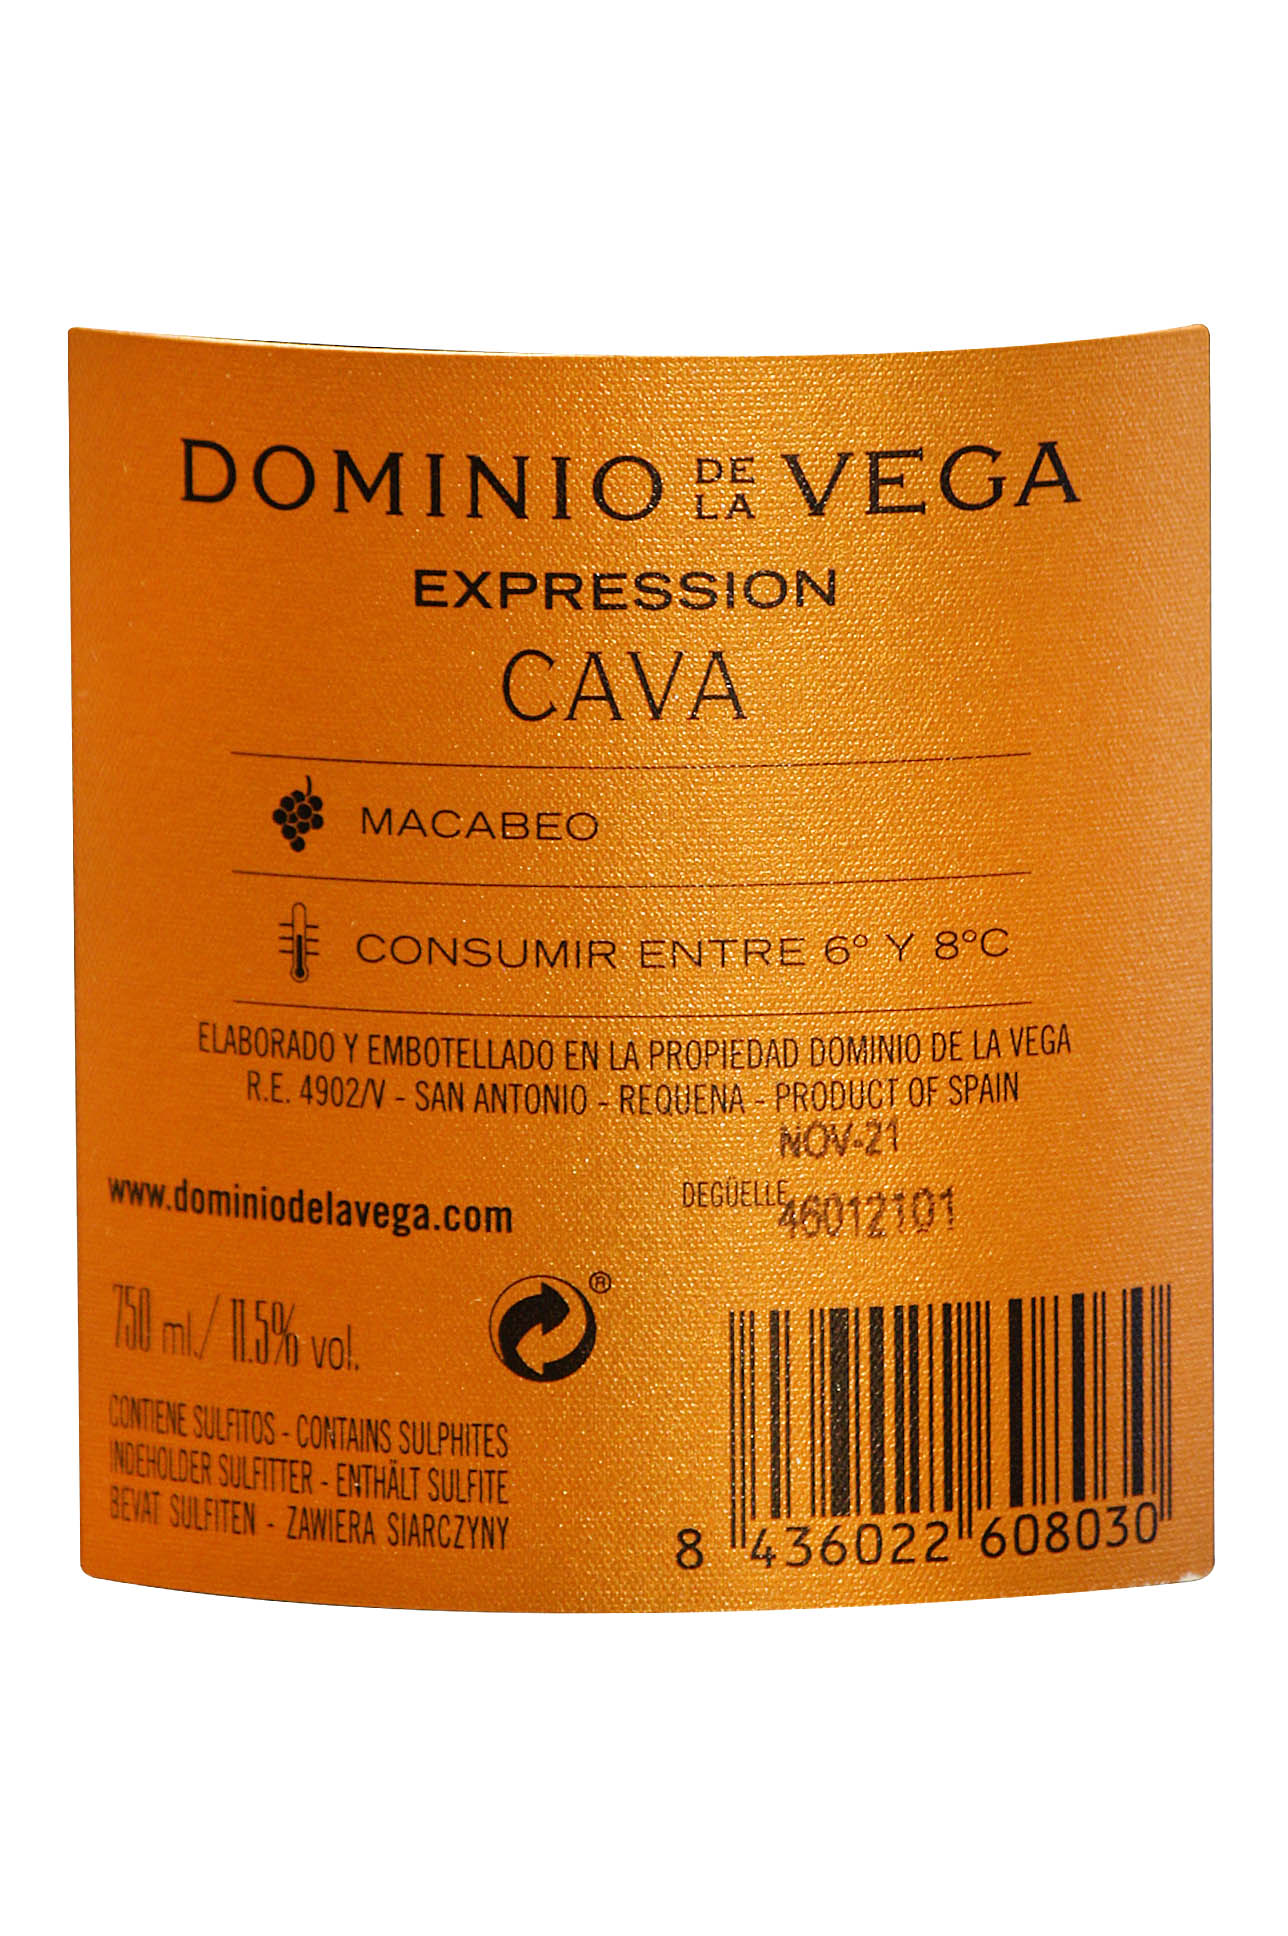 BB61: Dominio de la Vega cava